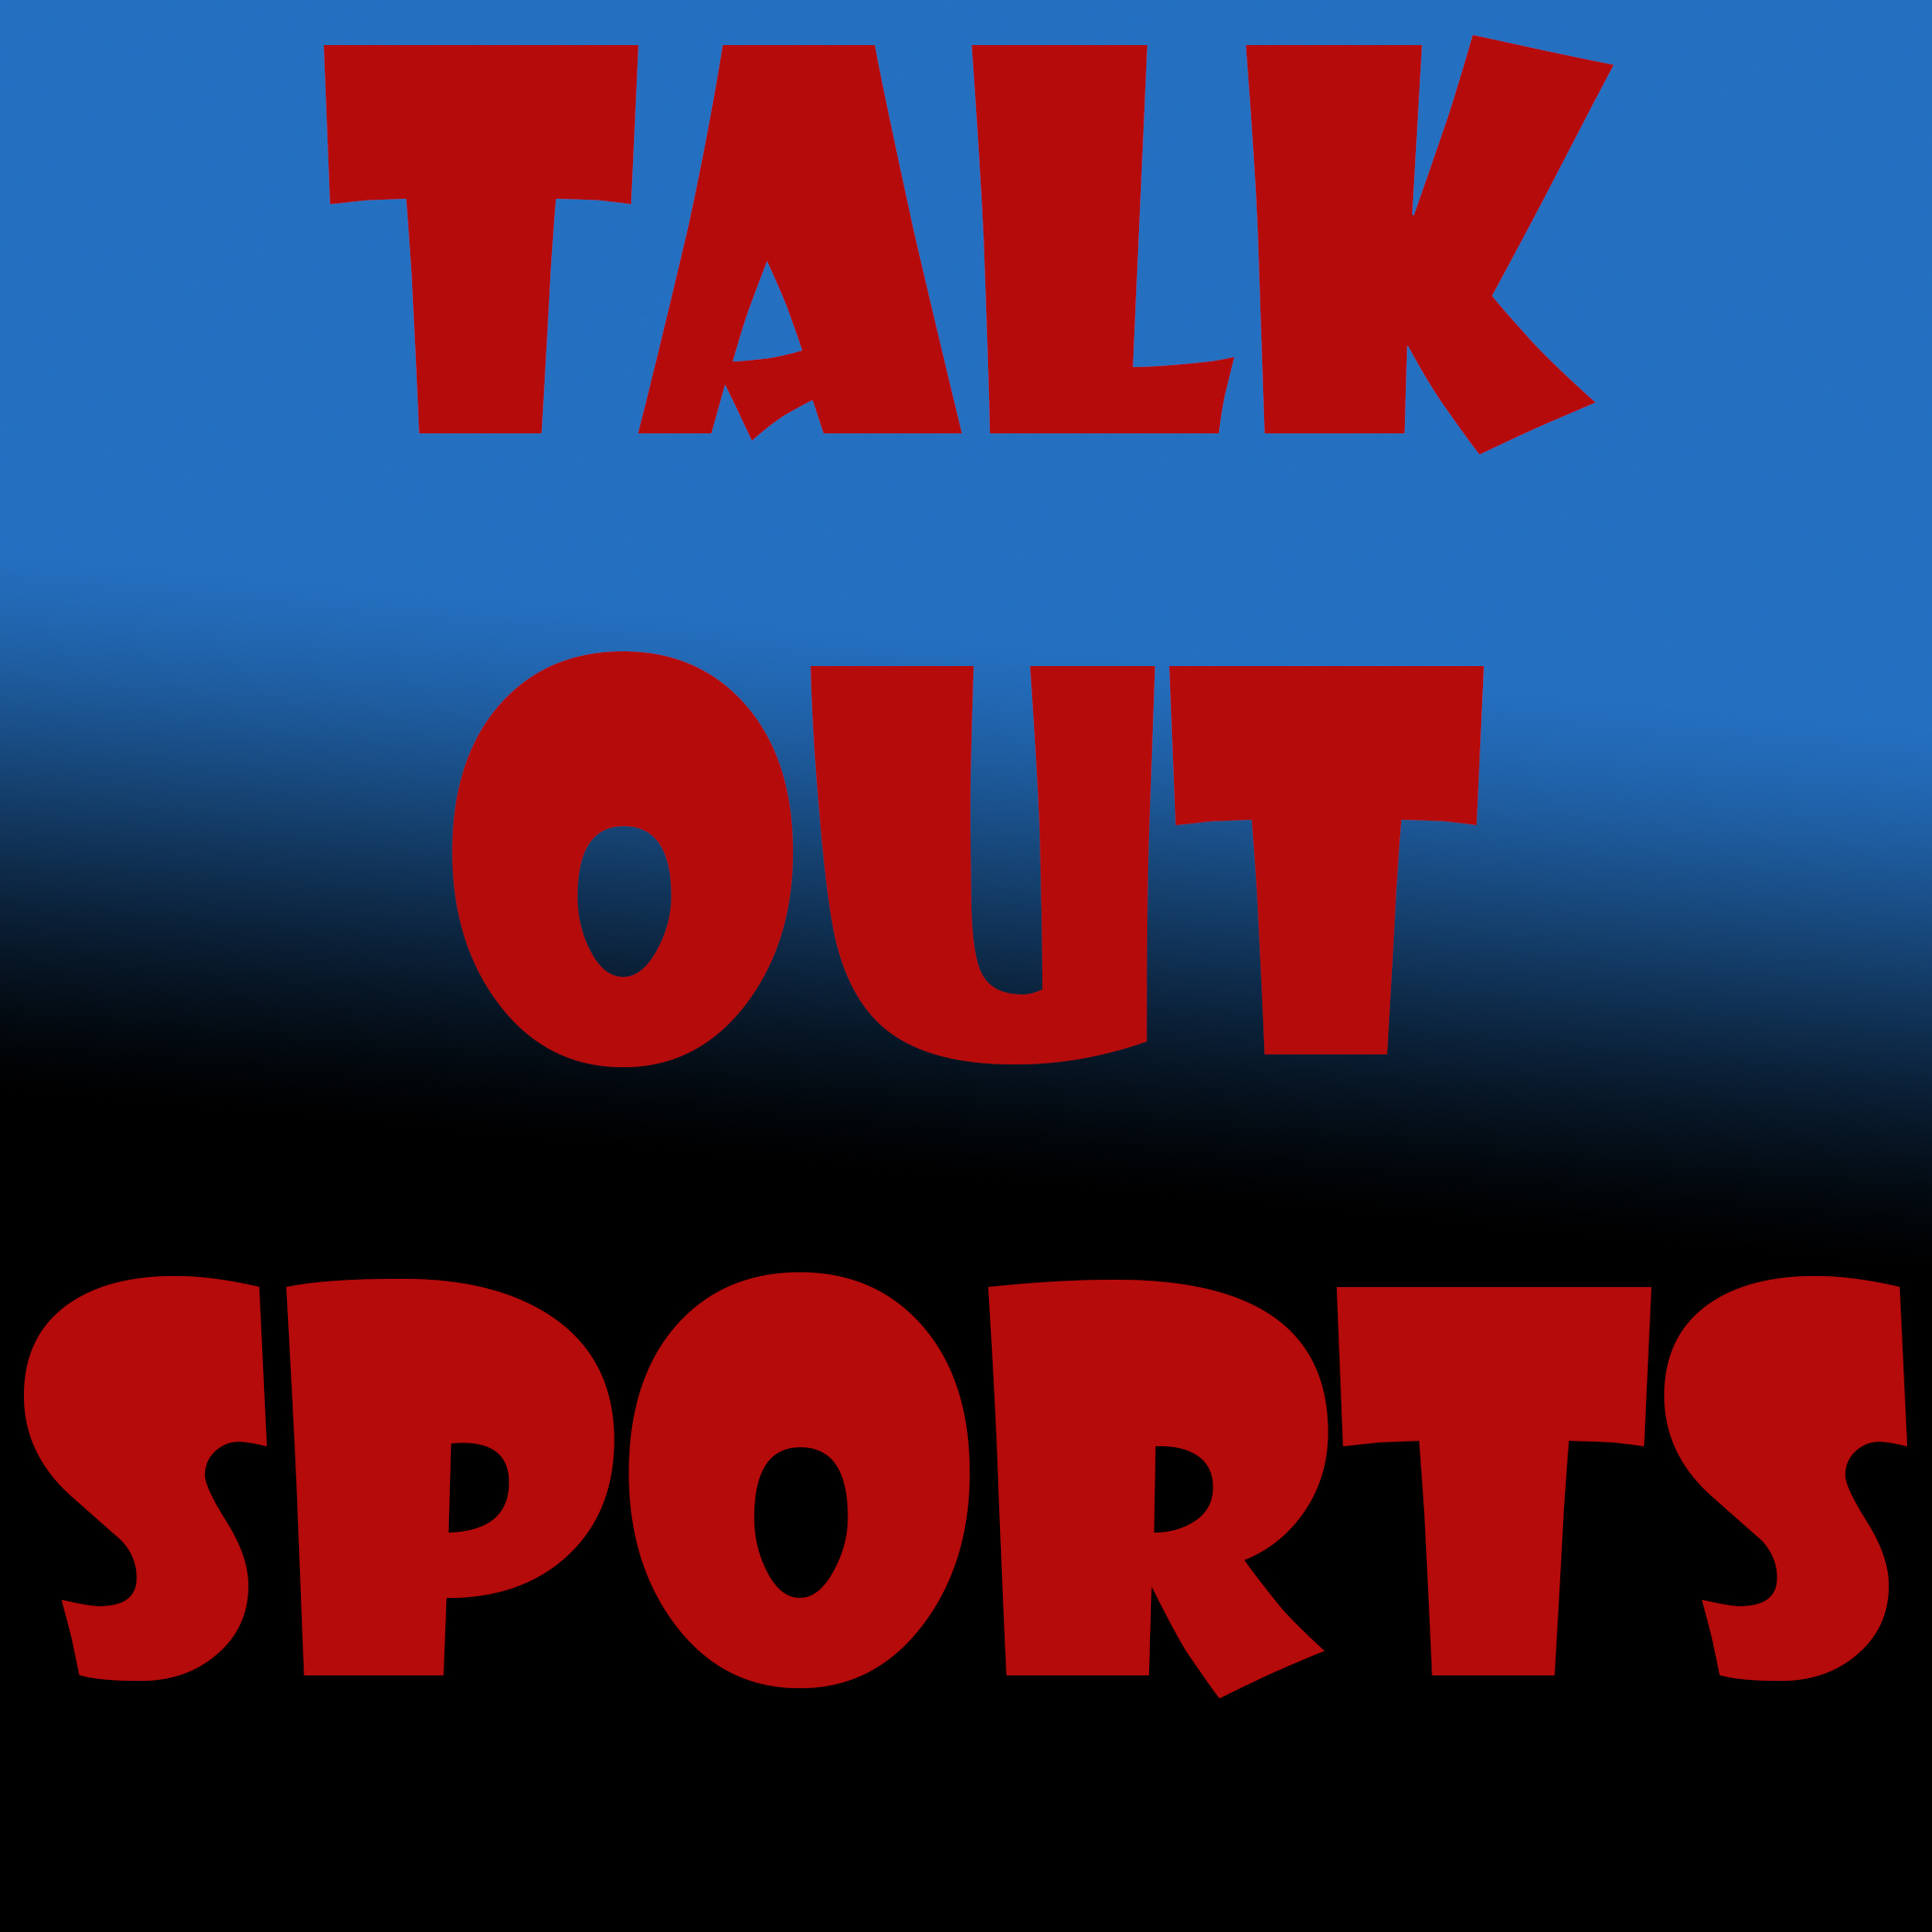 Talk Out Sports